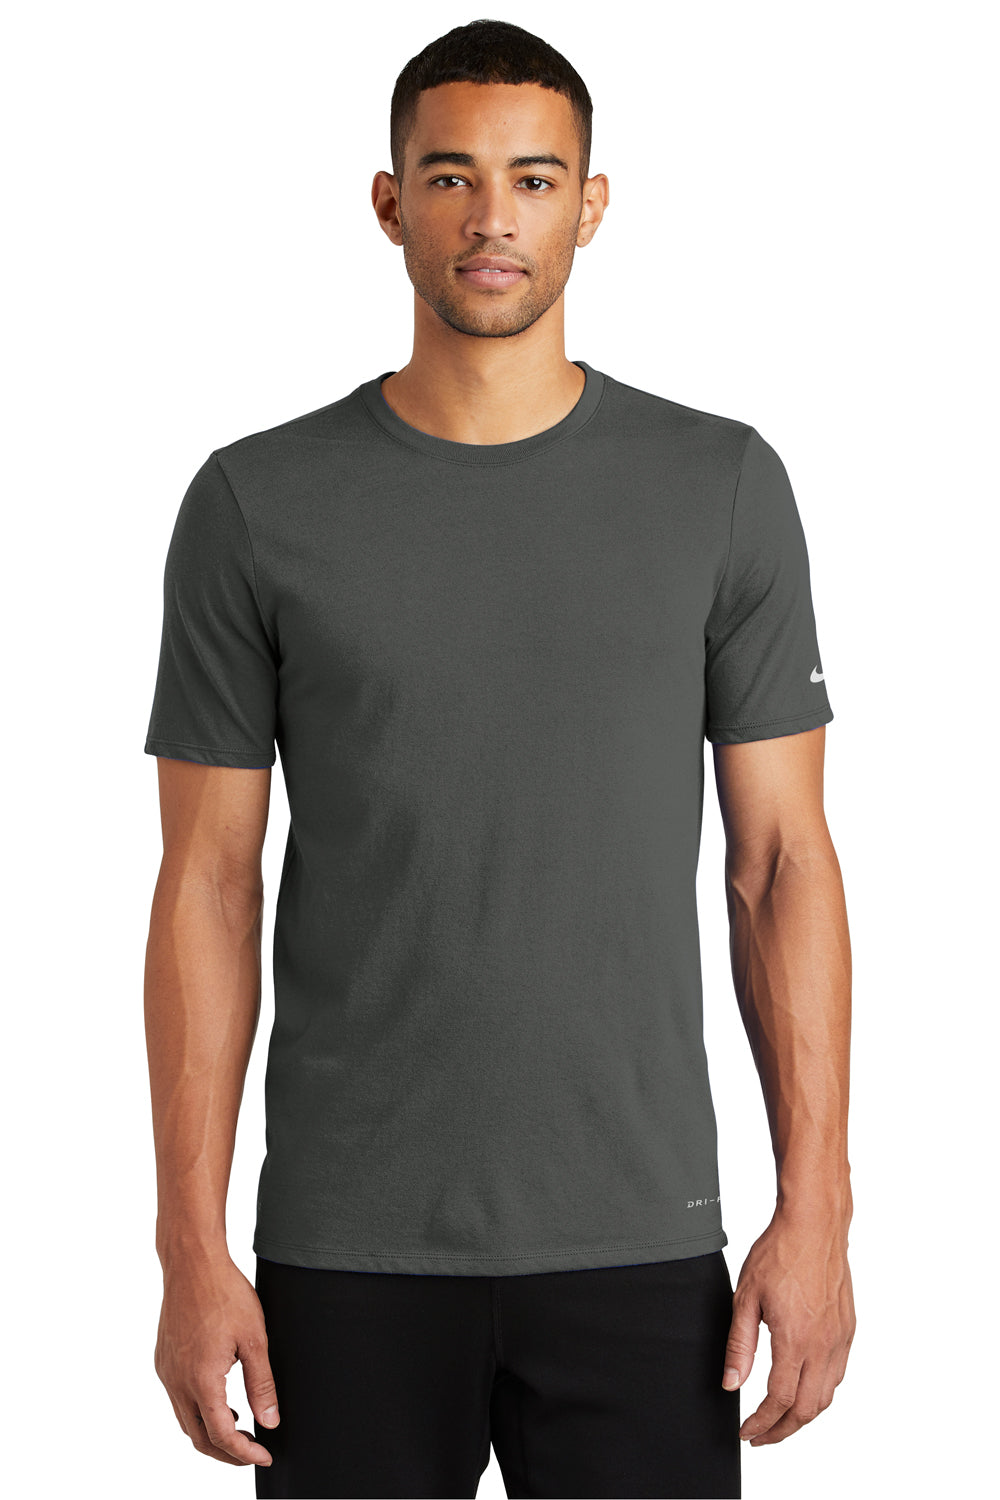 Nike NKBQ5231 Mens Dri-Fit Moisture Wicking Short Sleeve Crewneck T-Shirt Anthracite Grey Model Front